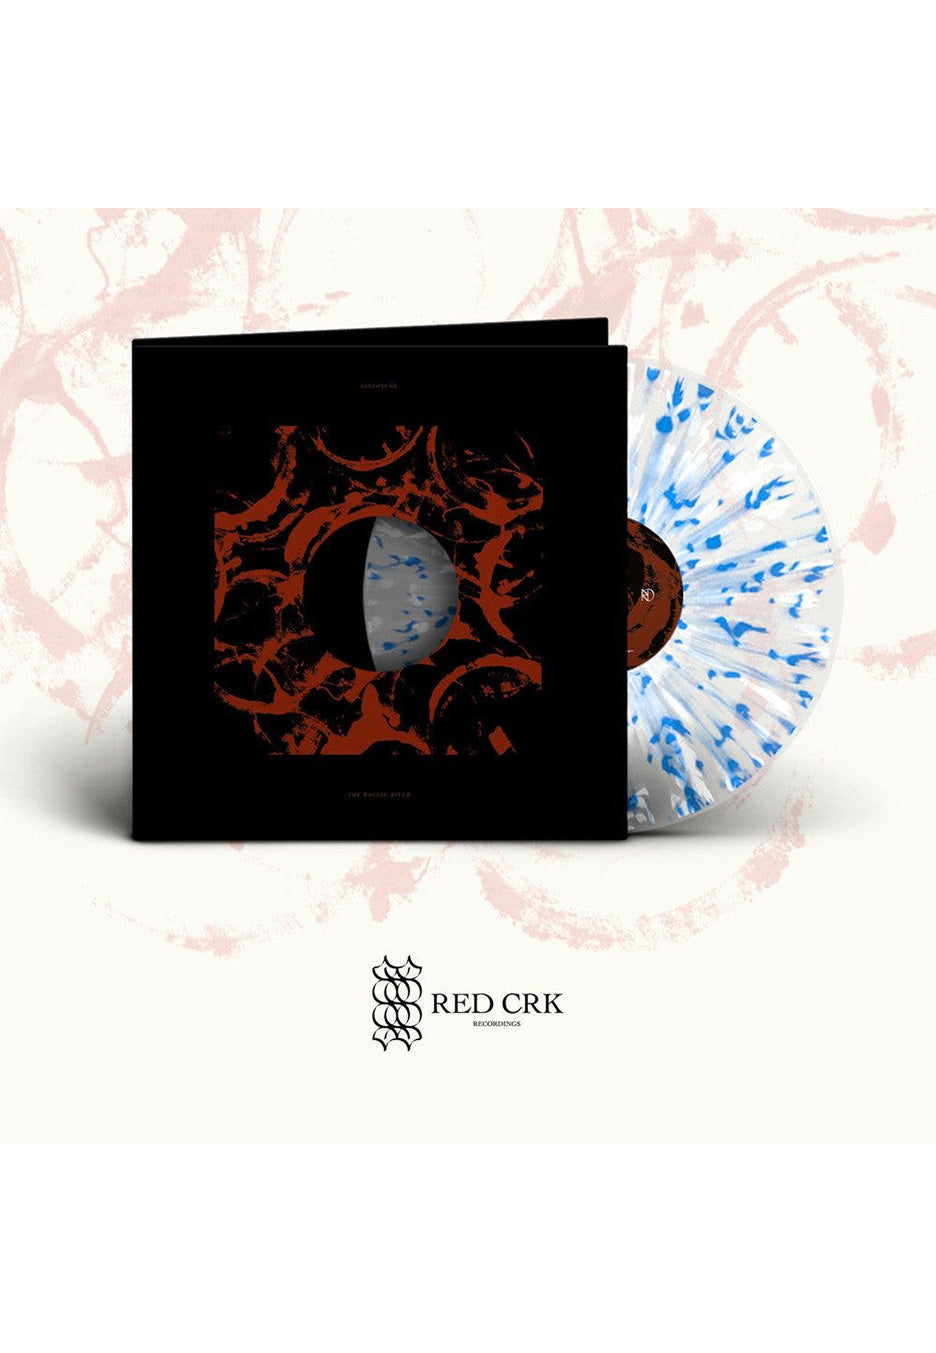 Cult Of Luna - The Raging River Clear/White/Blue - Splattered Vinyl